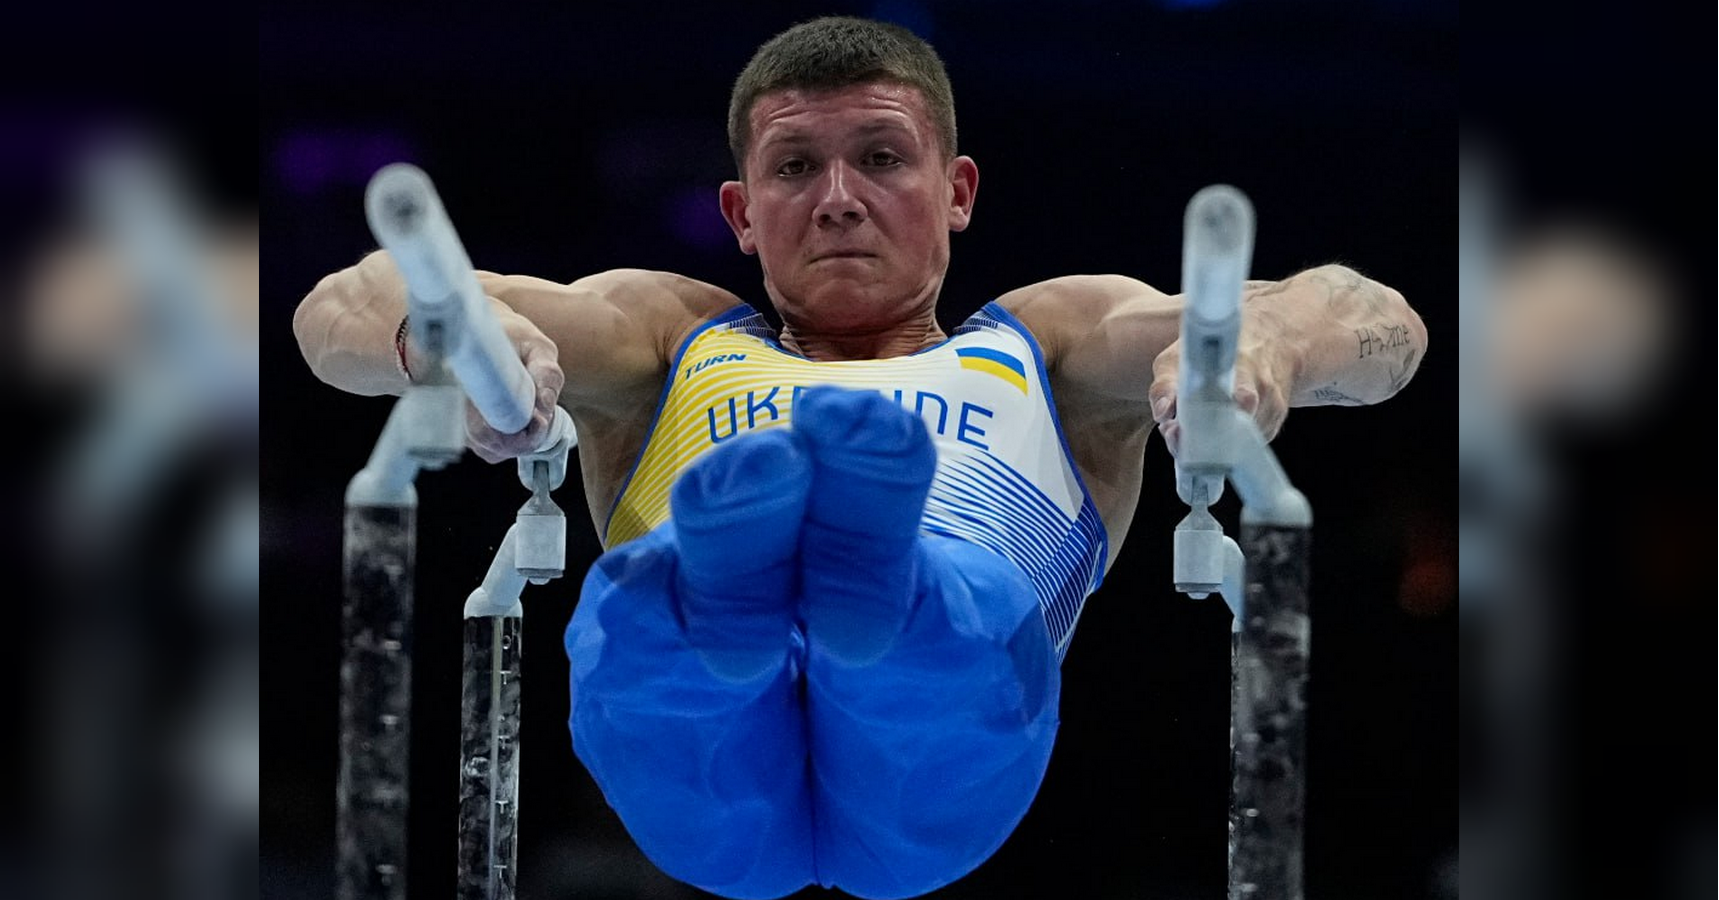 Ukrainian Ilya Kovtun became a three-time European champion in gymnastics